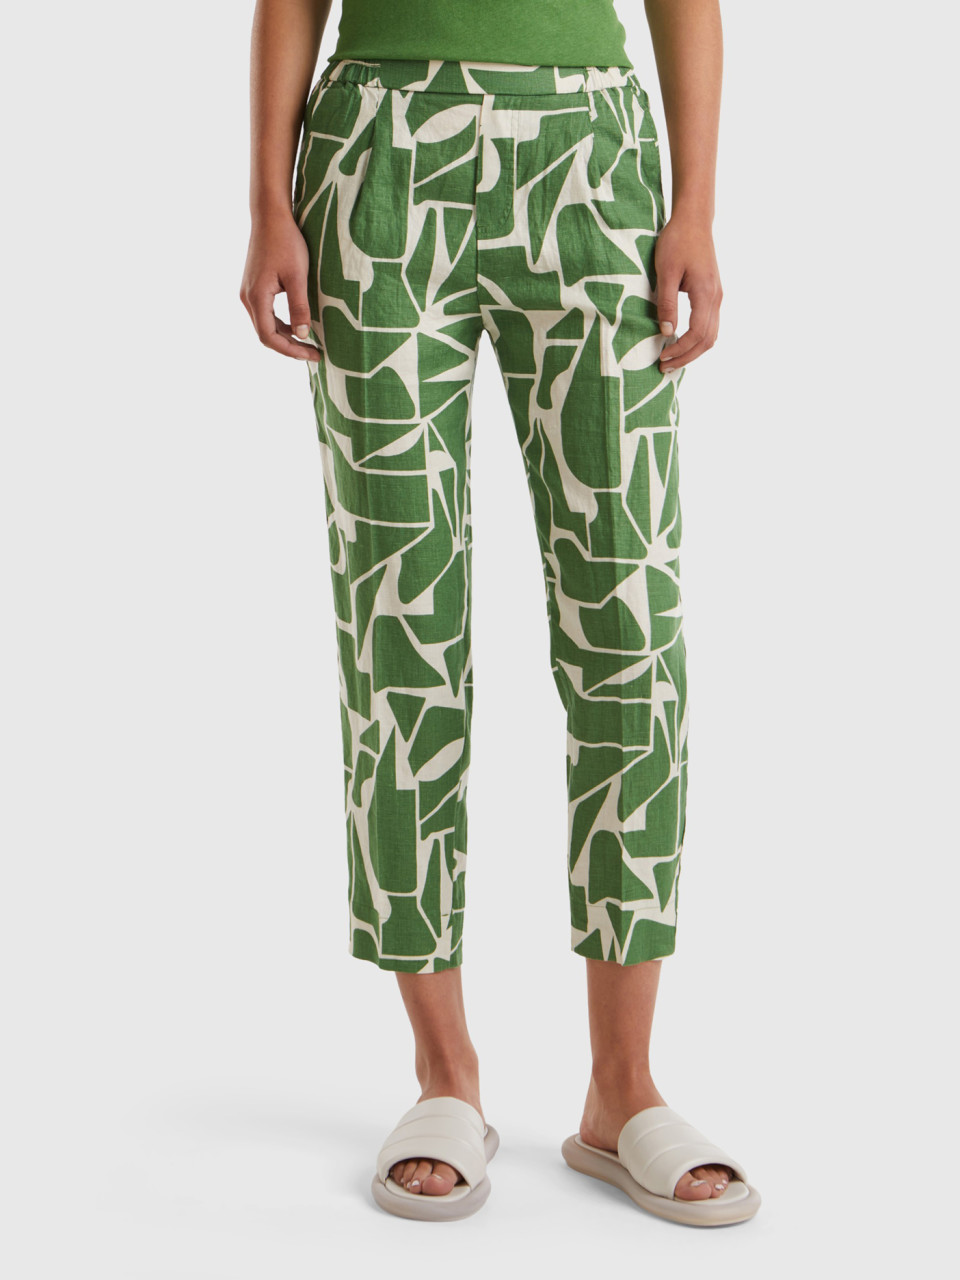 Benetton, Printed Linen Trousers, Military Green, Women